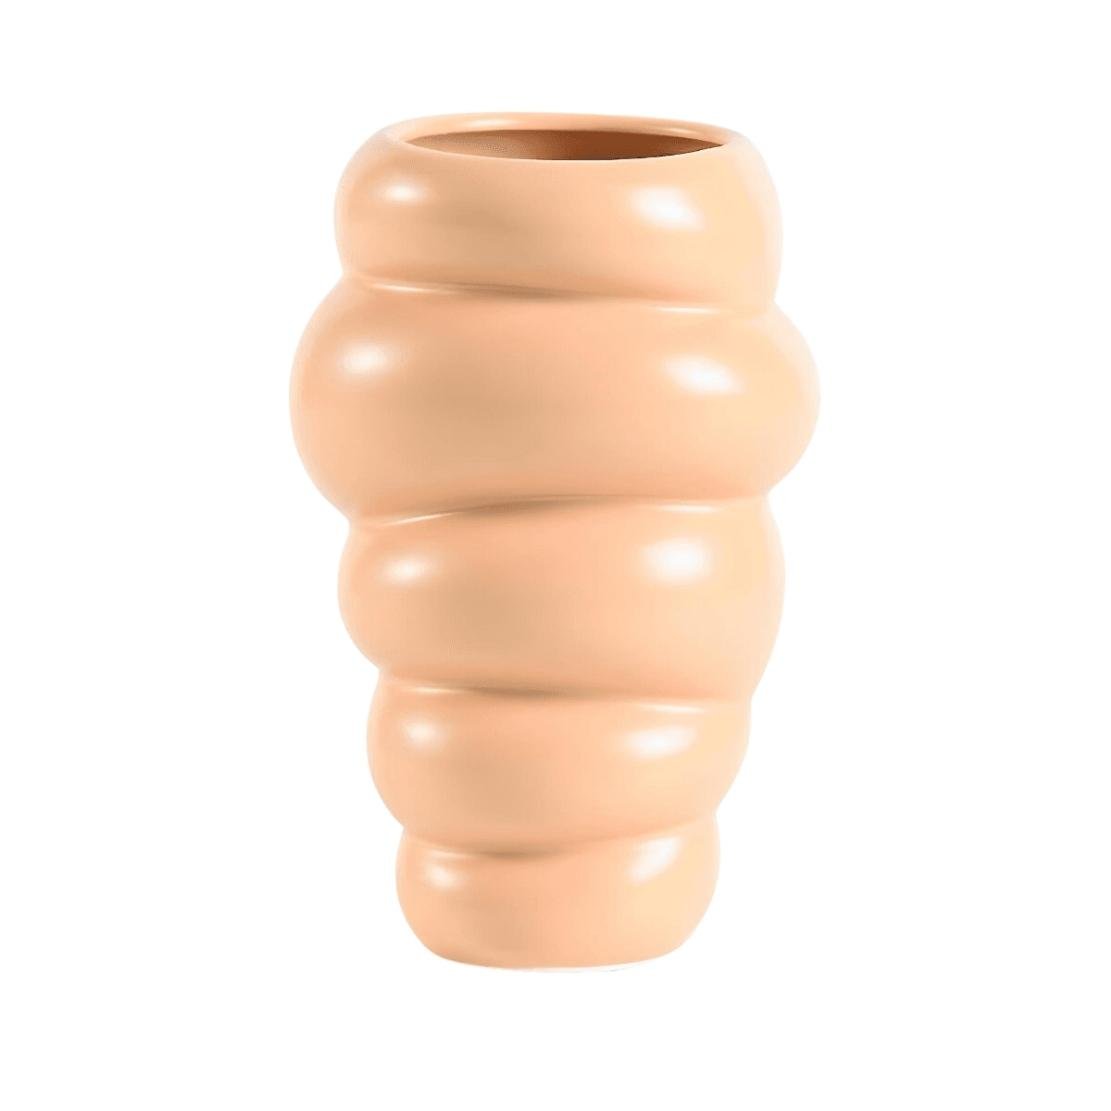 Tall, orange ceramic honeycomb vase